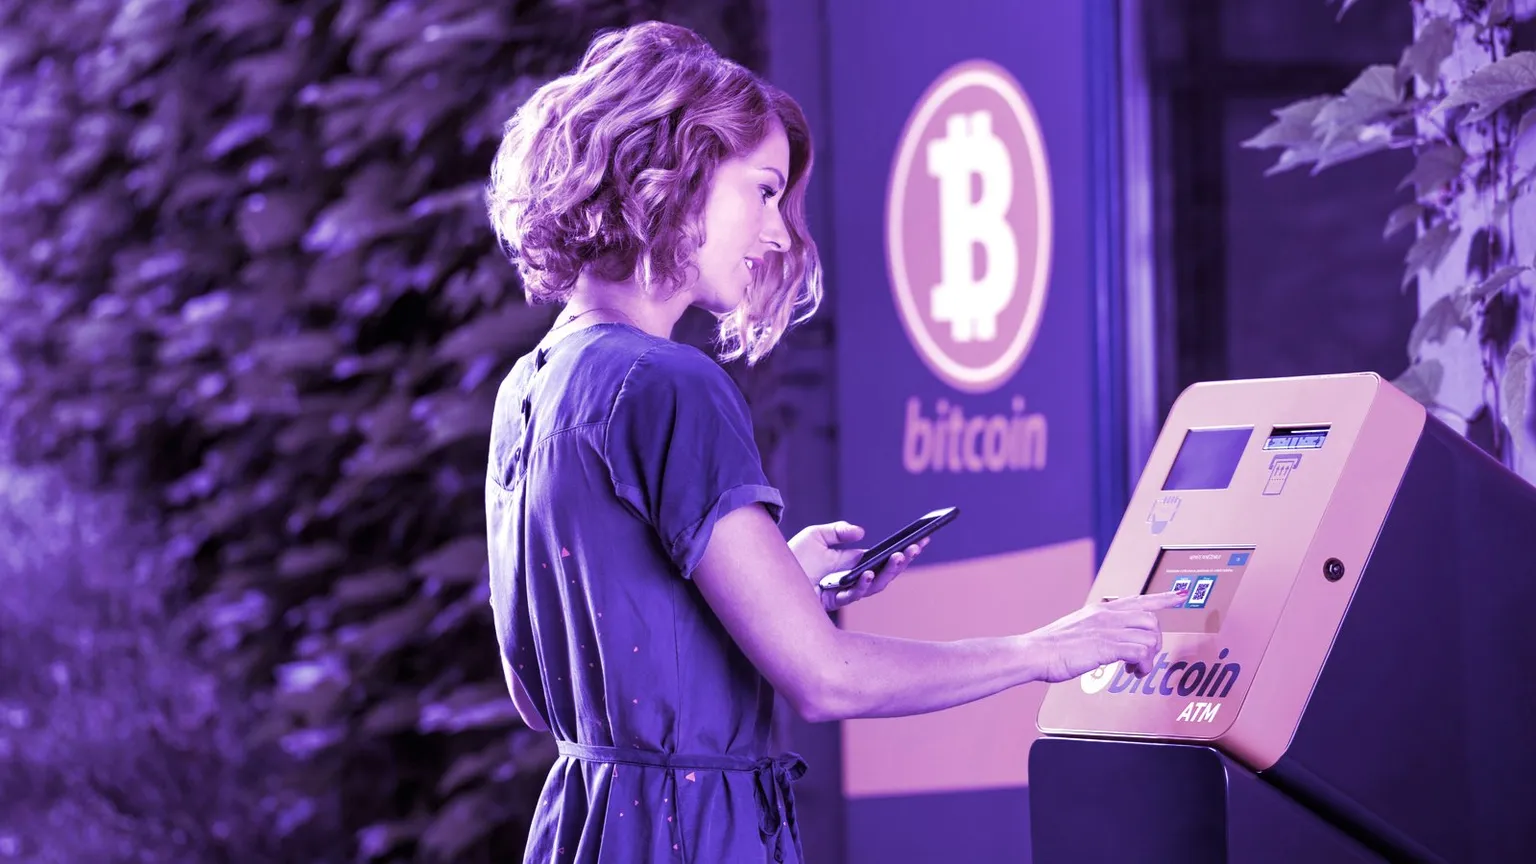 Bitcoin ATM. Image: Shutterstock